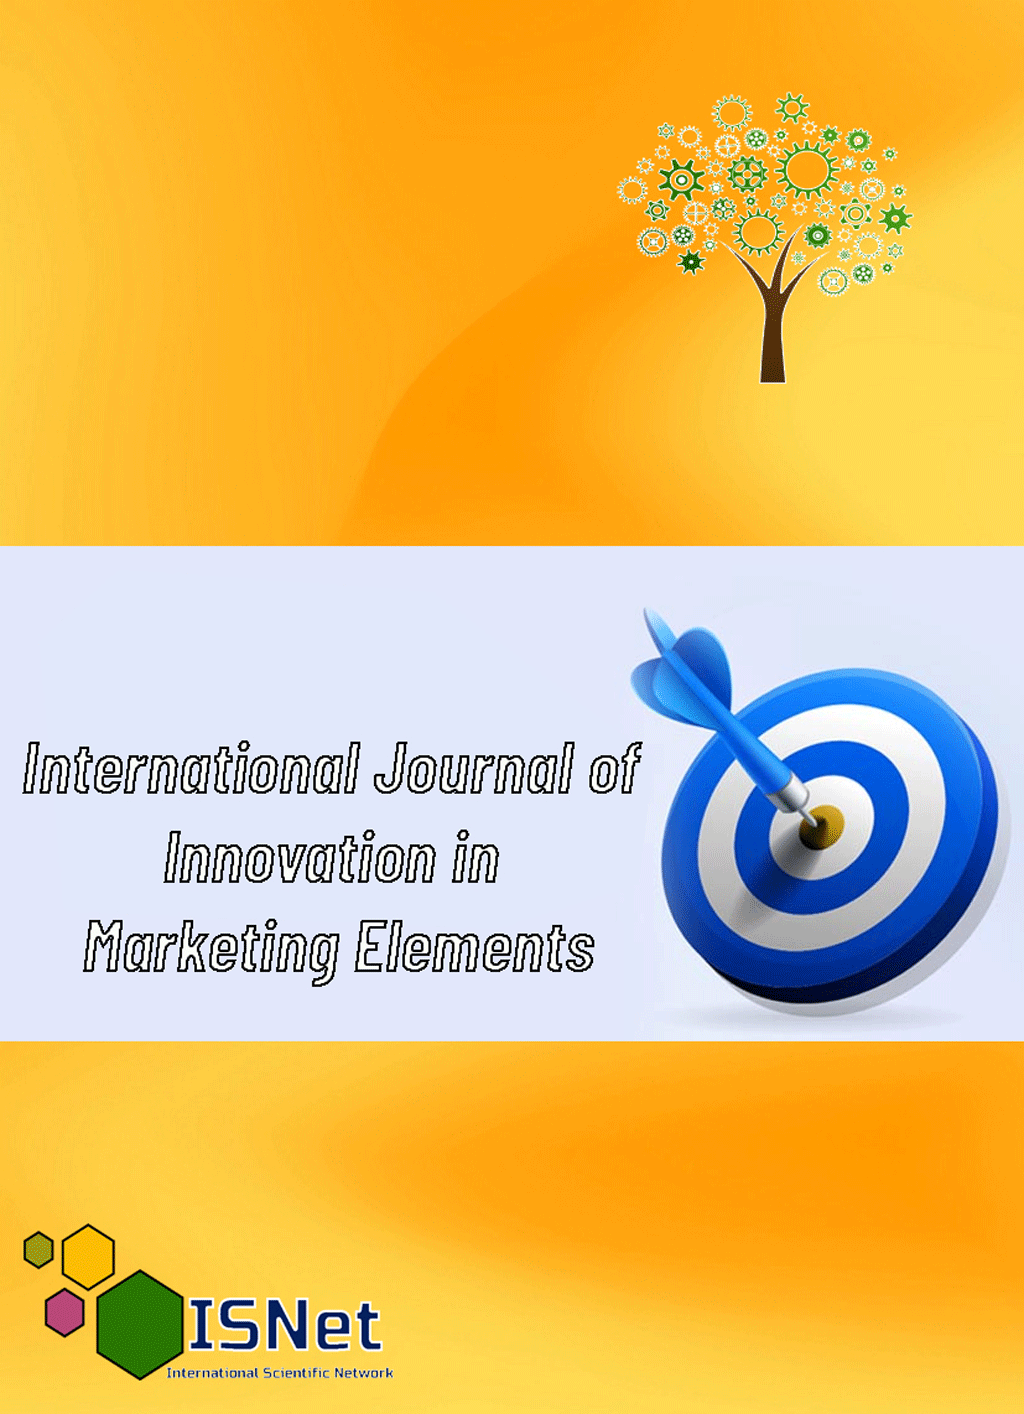 Innovation in Marketing Elements